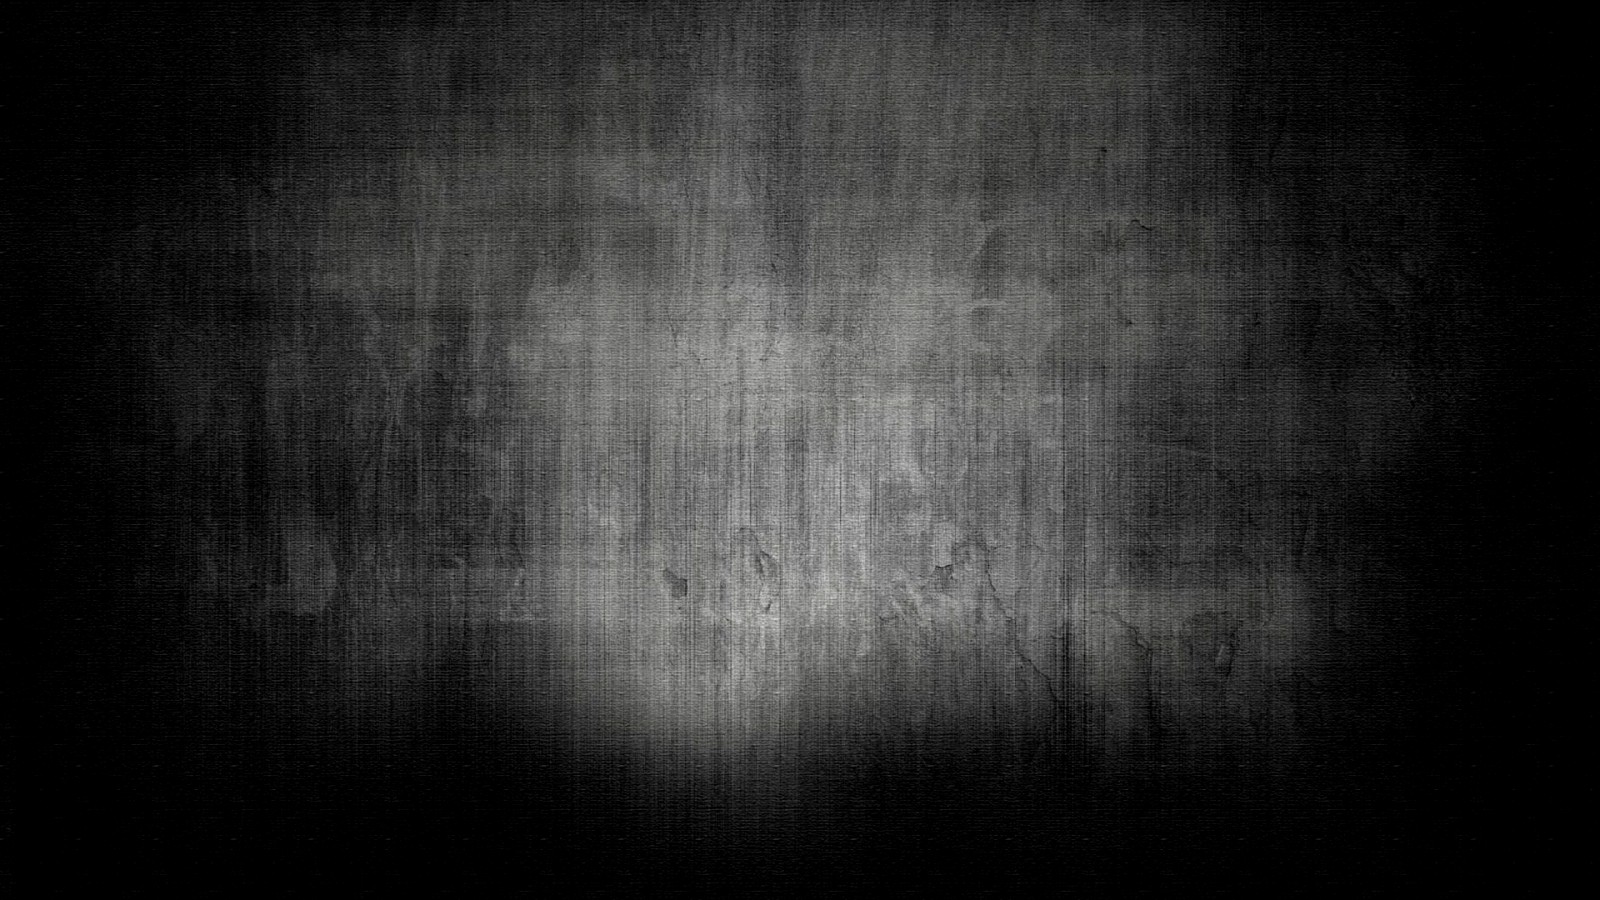  orgwp contentuploads201306Texture Background Dark Spot HDjpg